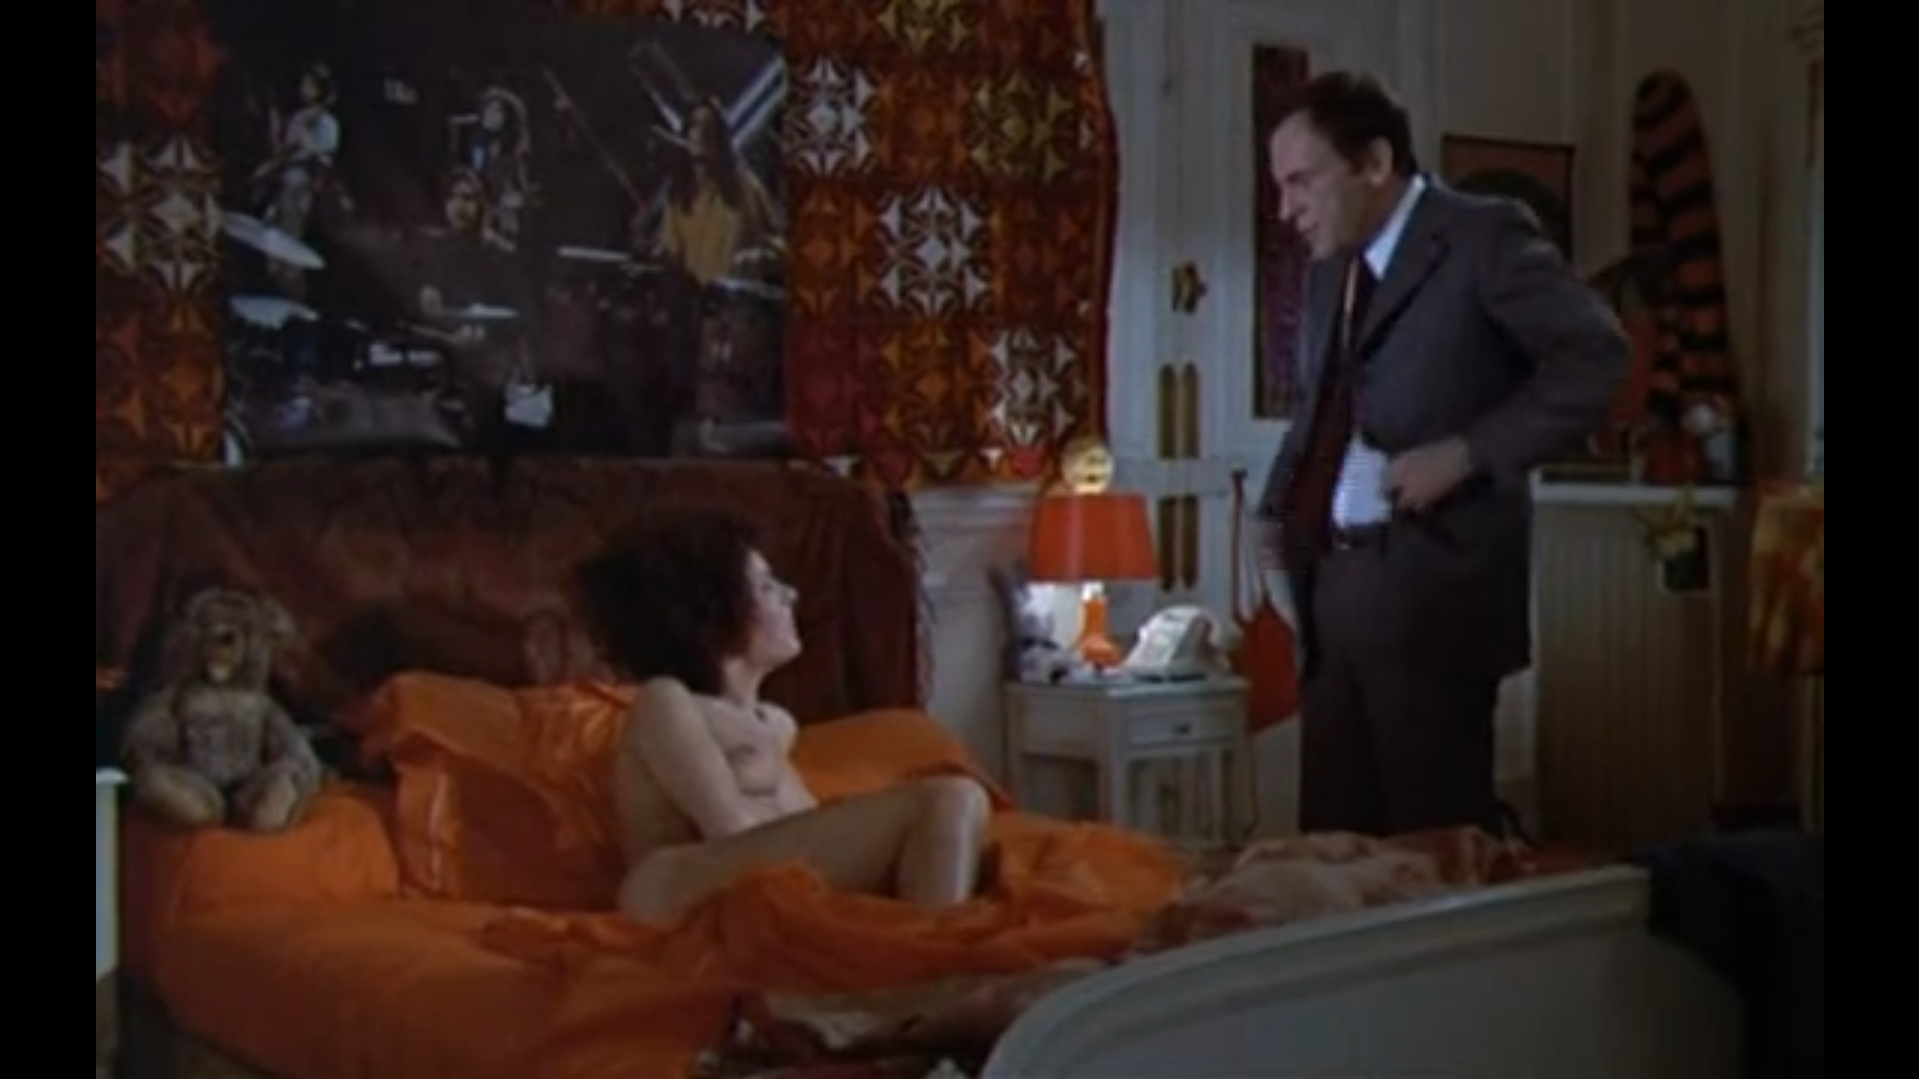 Boobs in the film Le Mouton enrag (1974) - NSFW, Boobs, Movies, Drama, Comedy, 1974, Longpost